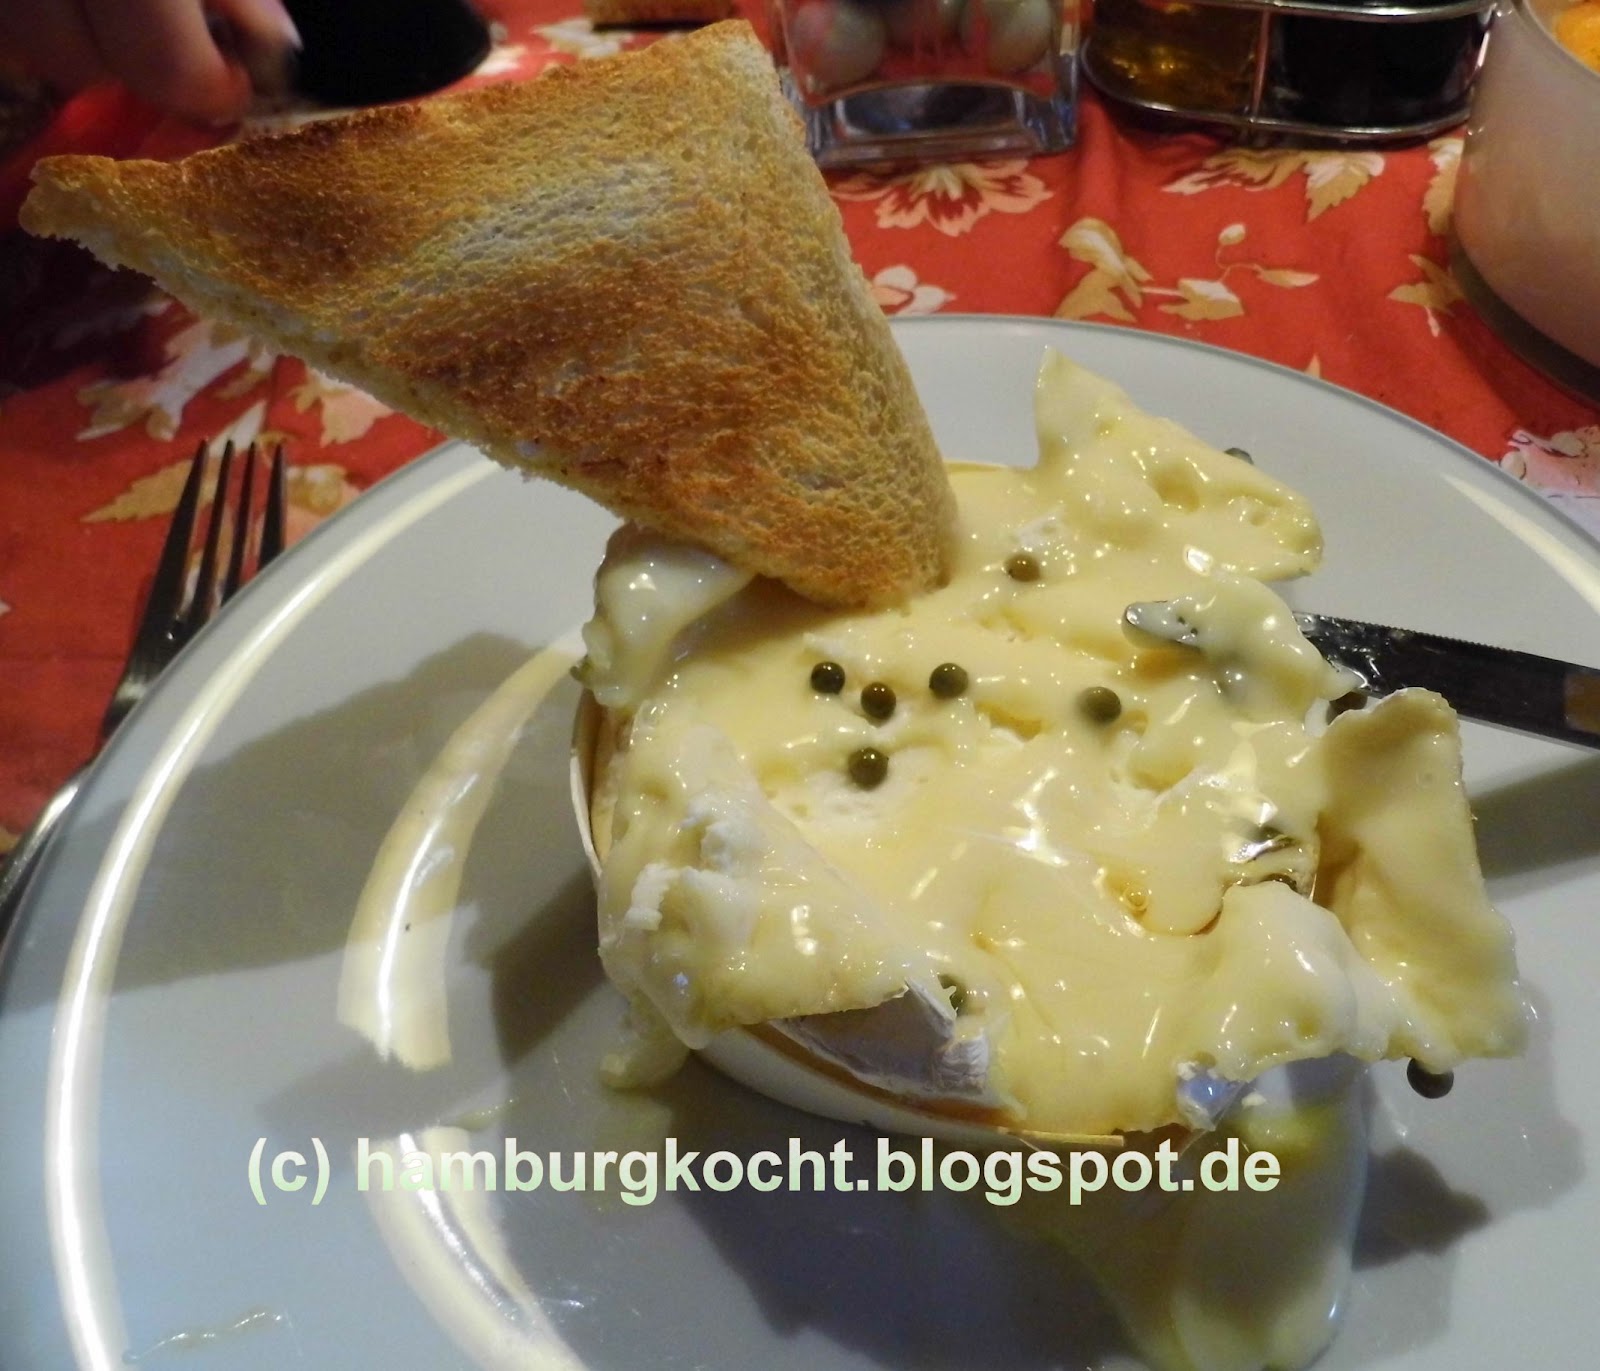 Hamburg kocht!: Arthurs Enkeltochter backt Camembert im Ofen mit grünem ...